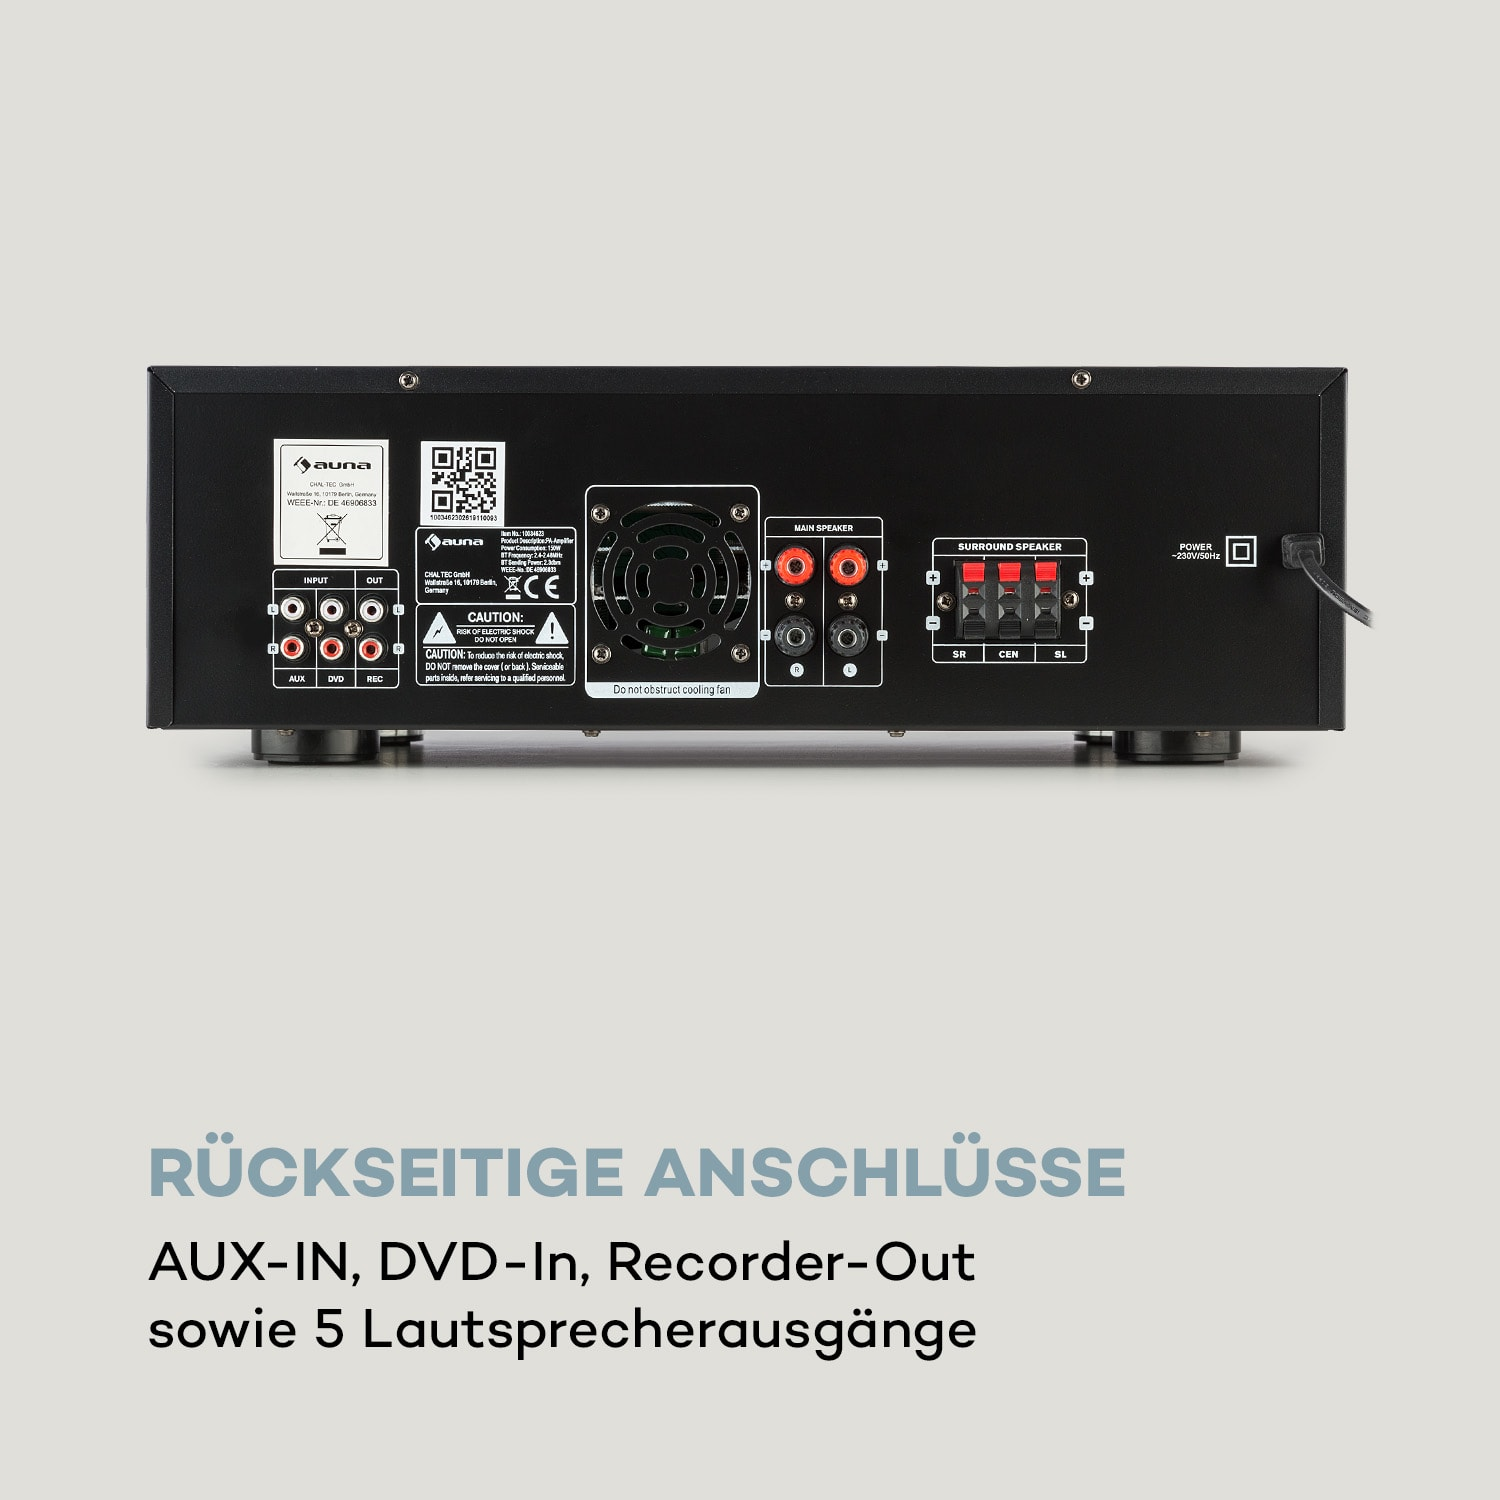 AUNA AMP-218 Kanal, Digital-Verstärker (3Kanäle, Schwarz) Wattpro 50 BT